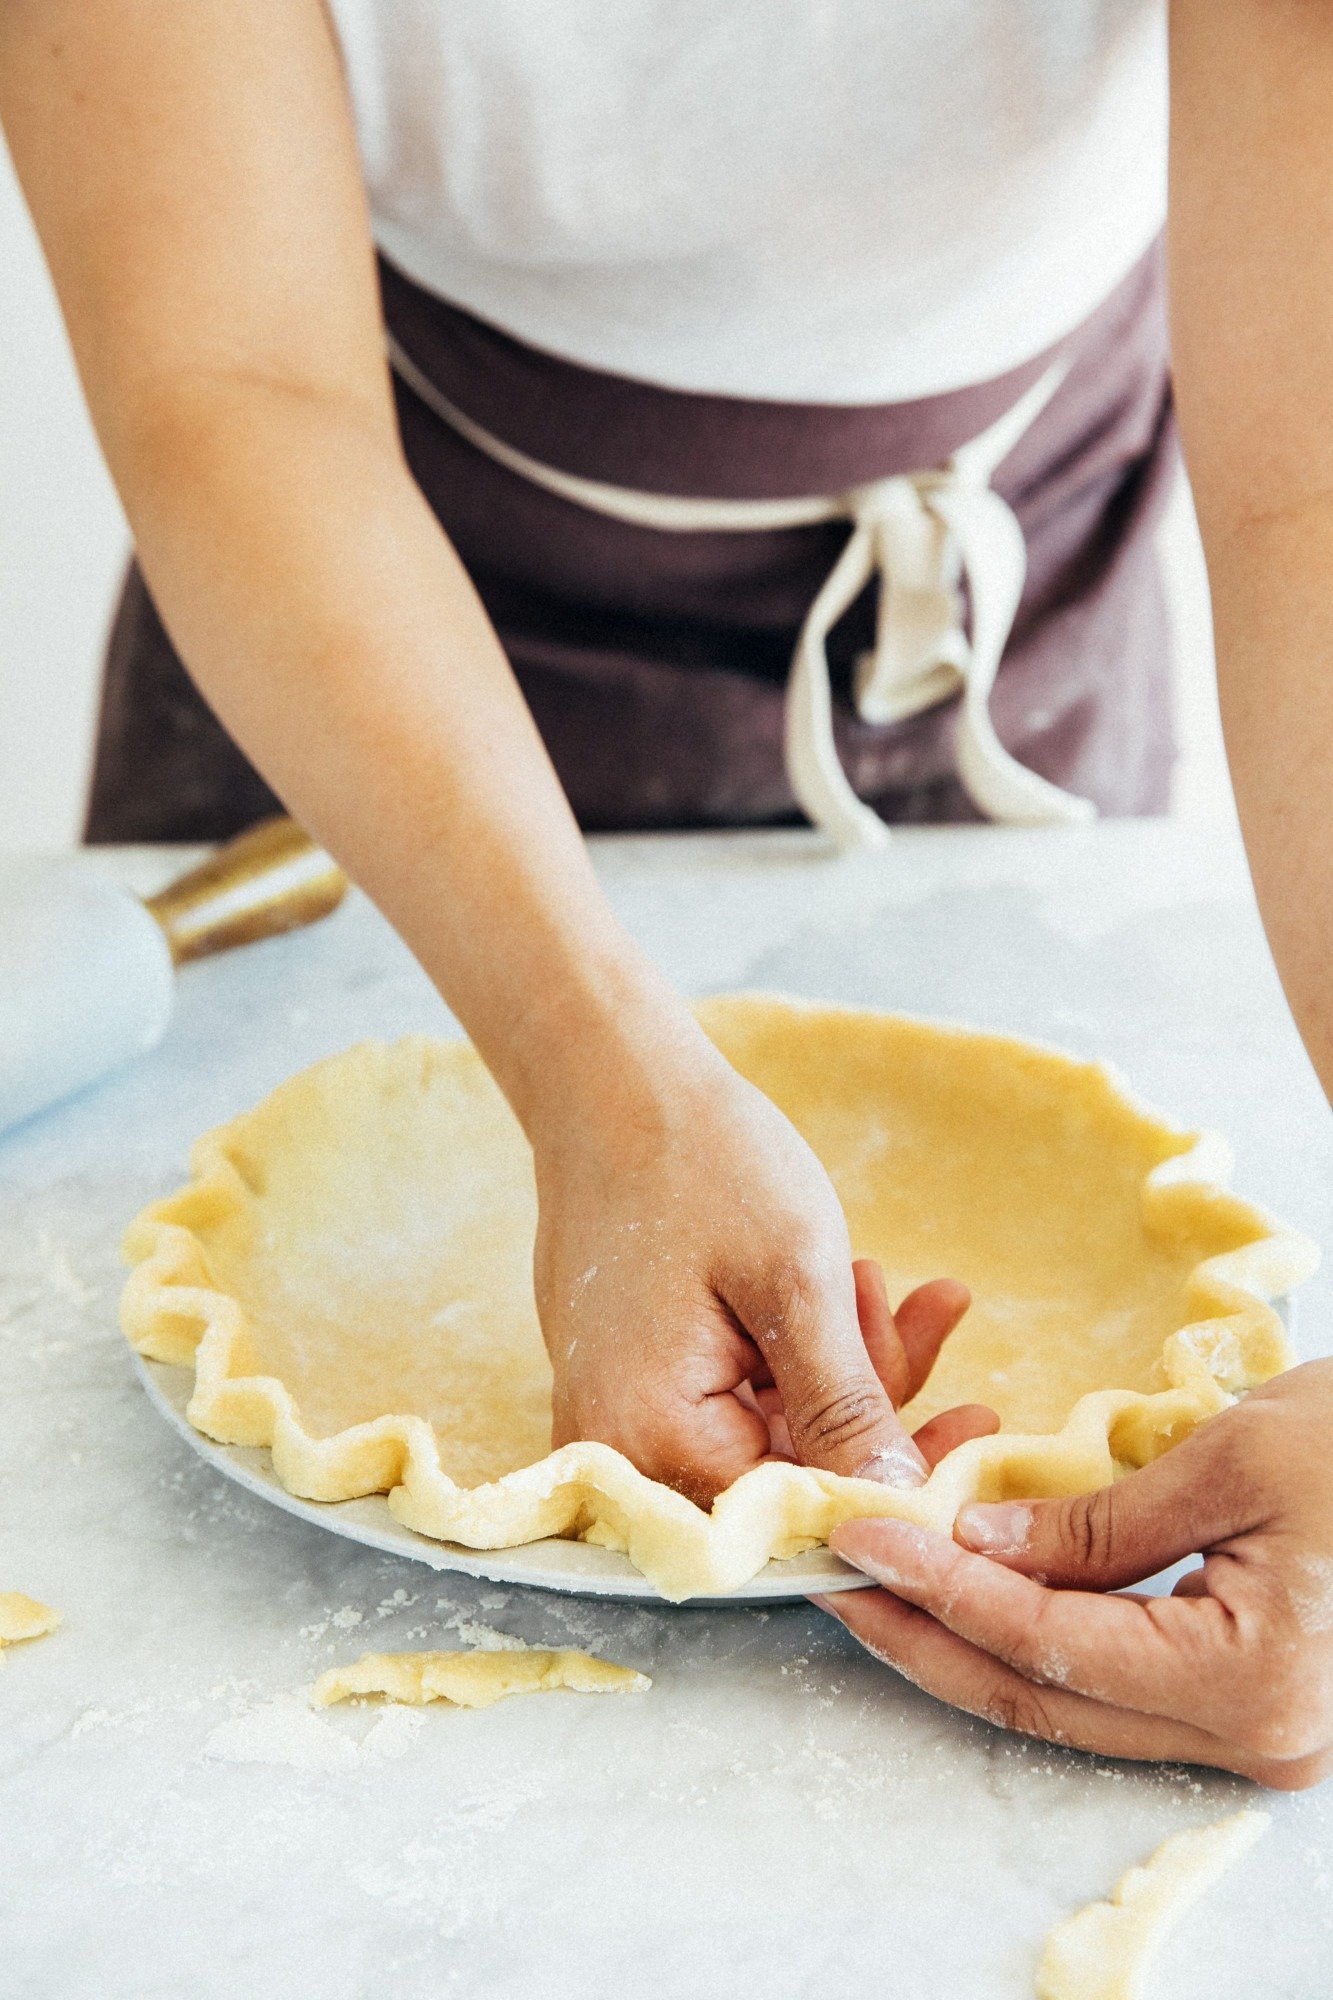 photo of a person crimping pie crust edge